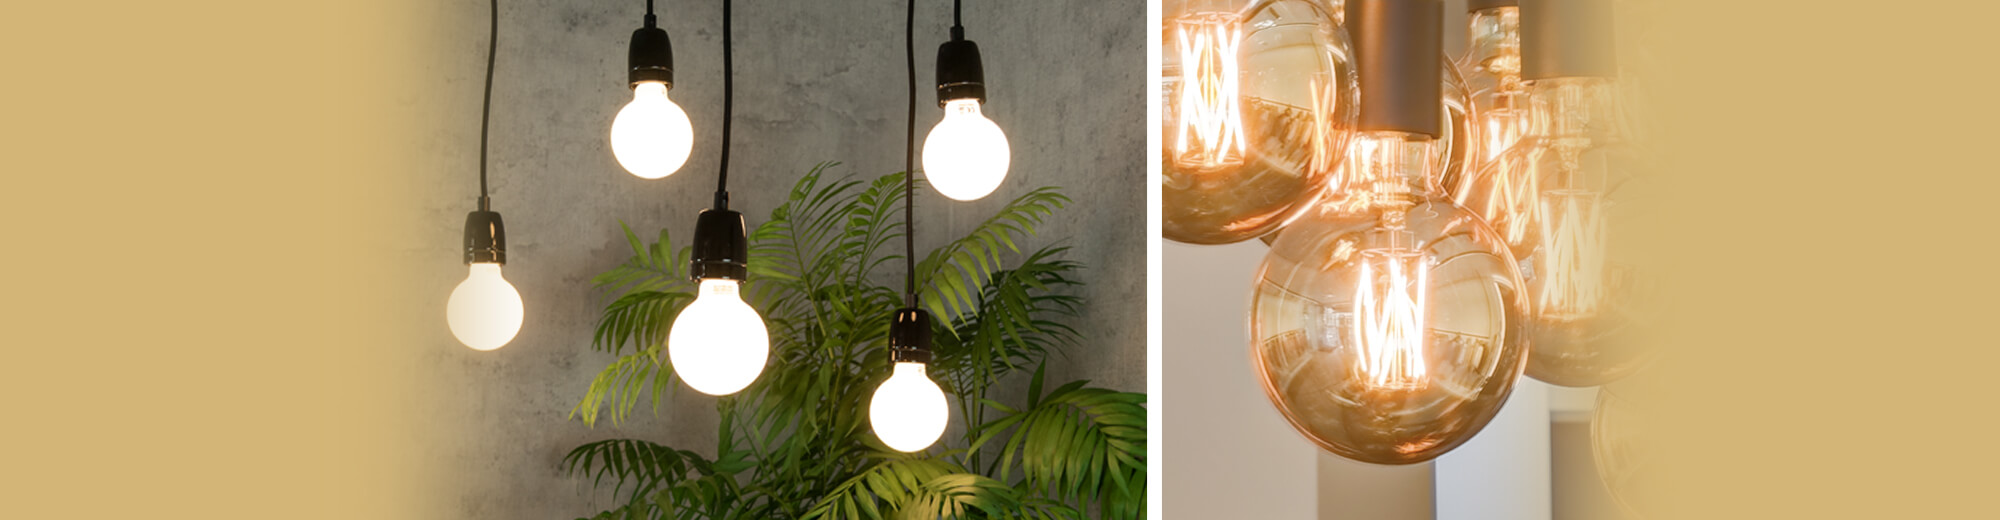 LED Globes - Glühlampen für perfekte Rundumabstrahlung | SEGULA